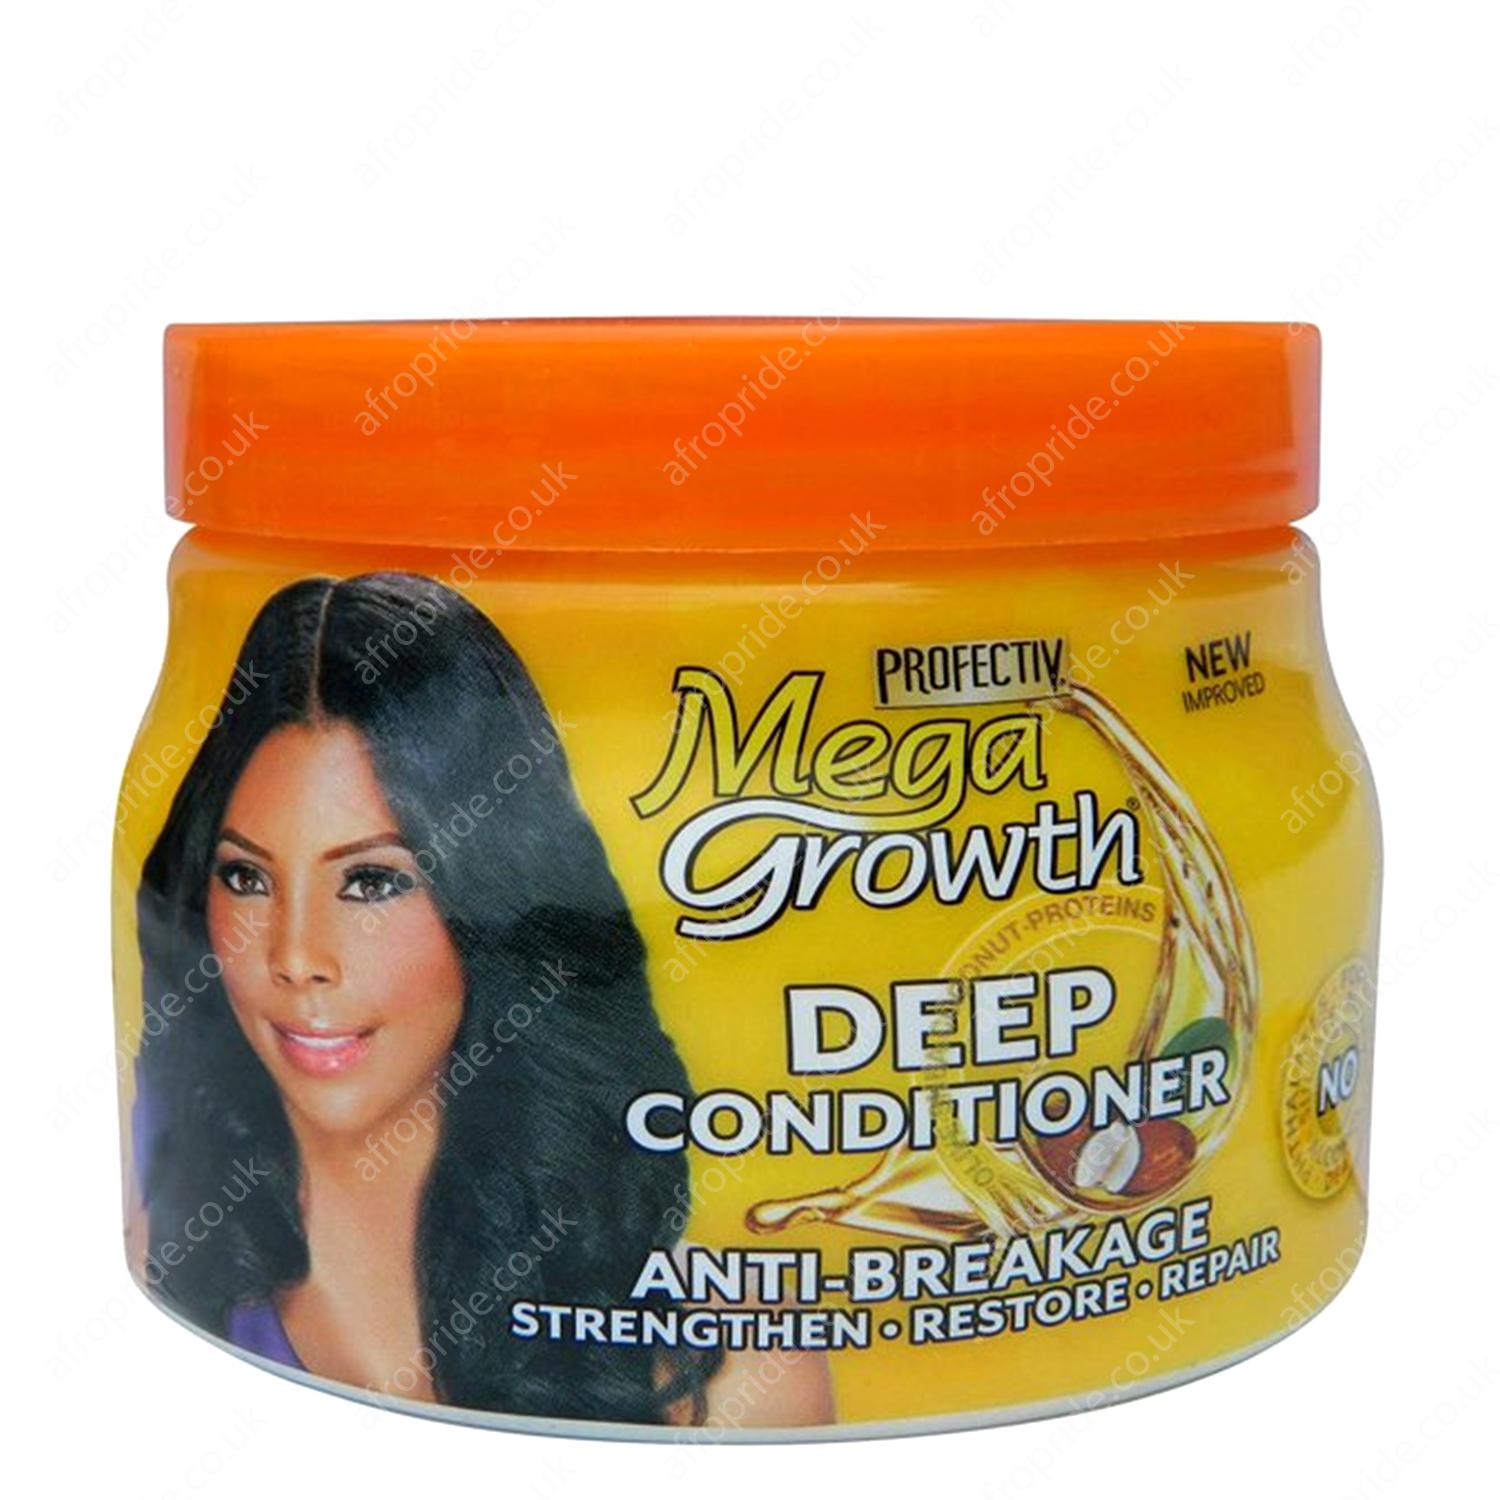 Profectiv Mega Growth Anti-Breakage Deep Conditioner 15 oz | Fix My Hair |  Voor 16.00u morgen in huis!